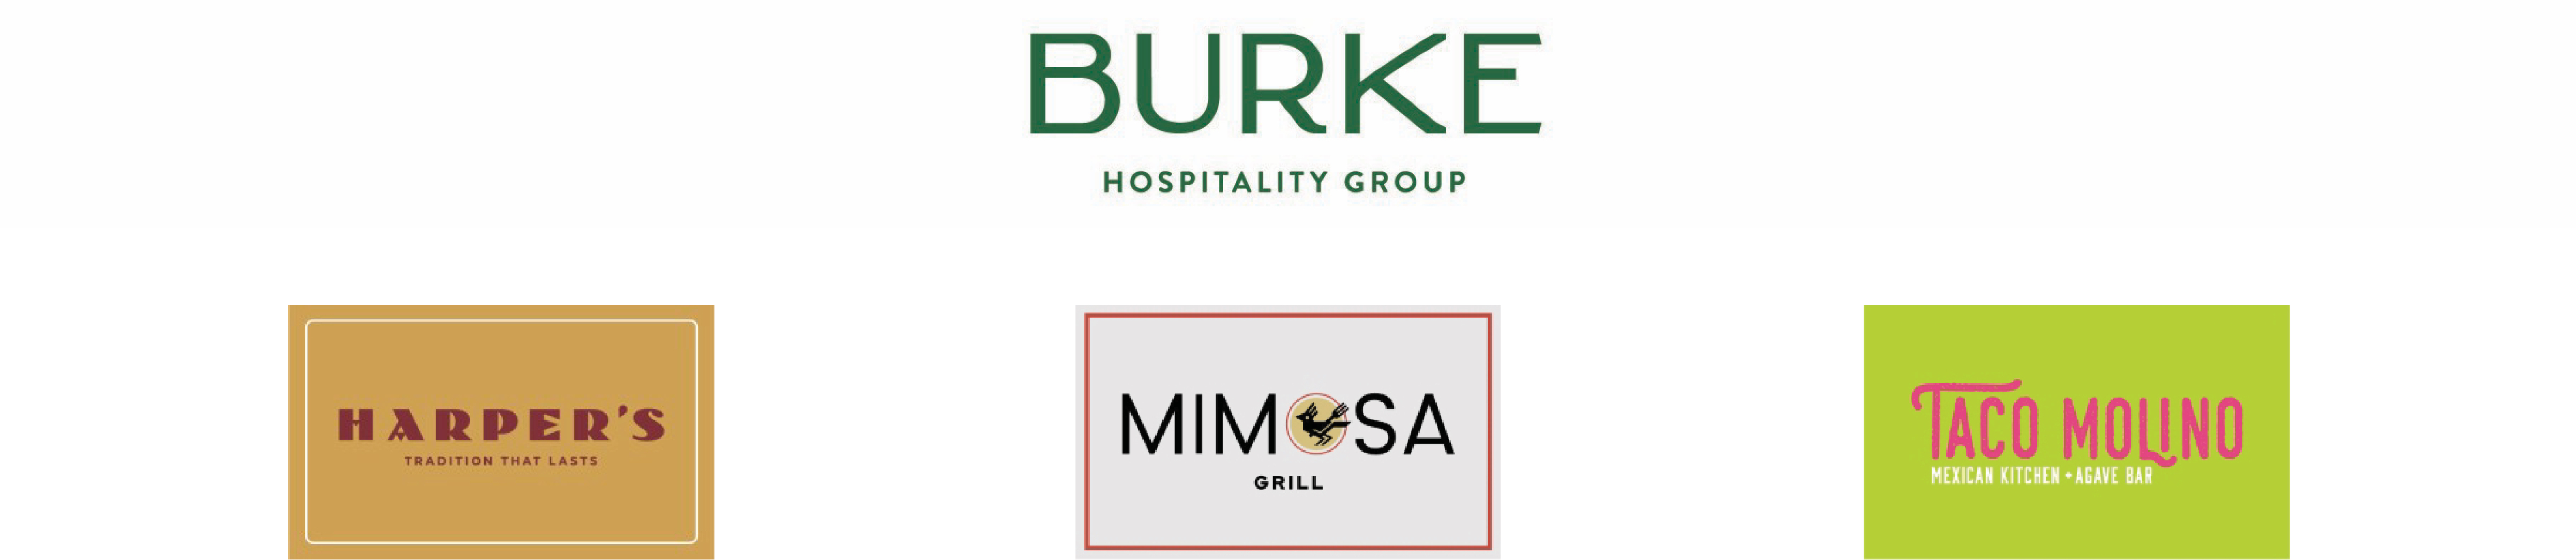 Burke Hospitality